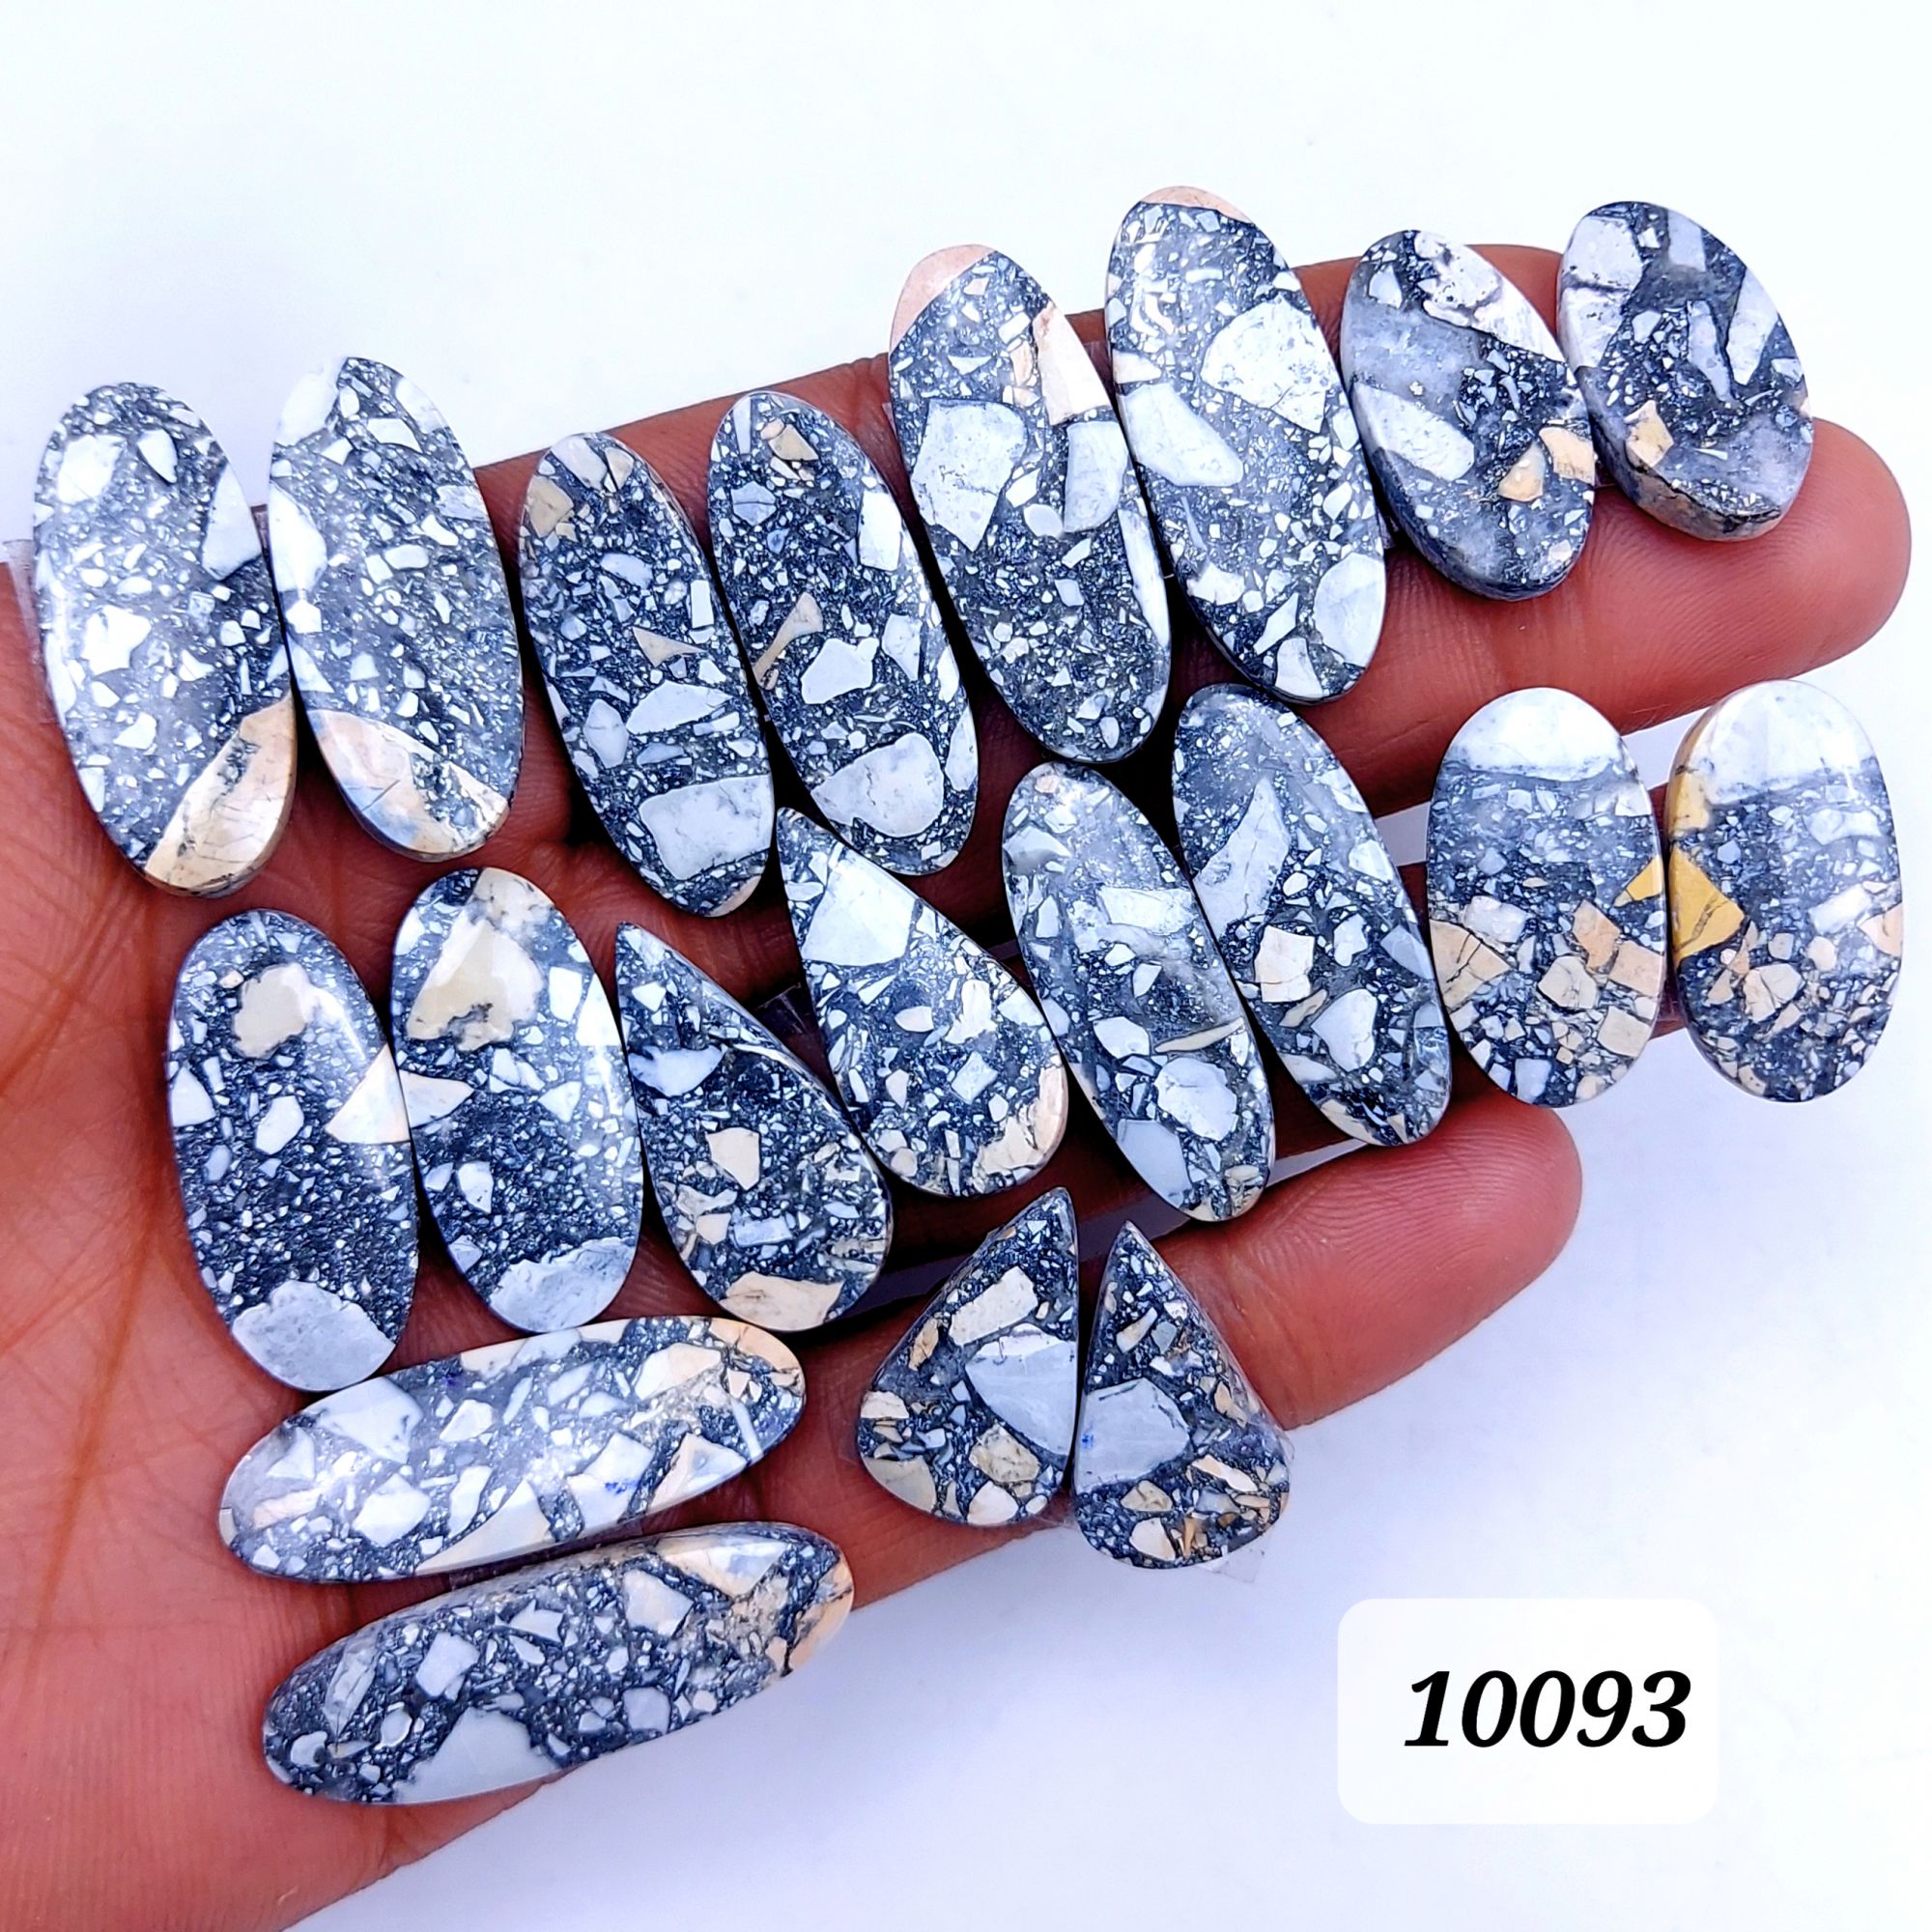 10Pcs 355Cts Natural Maligano Jasper Cabochon Pair Lot Back Side Unpolished Semi-Precious Gemstones For Jewelry Making 36x33 22x13mm #10093